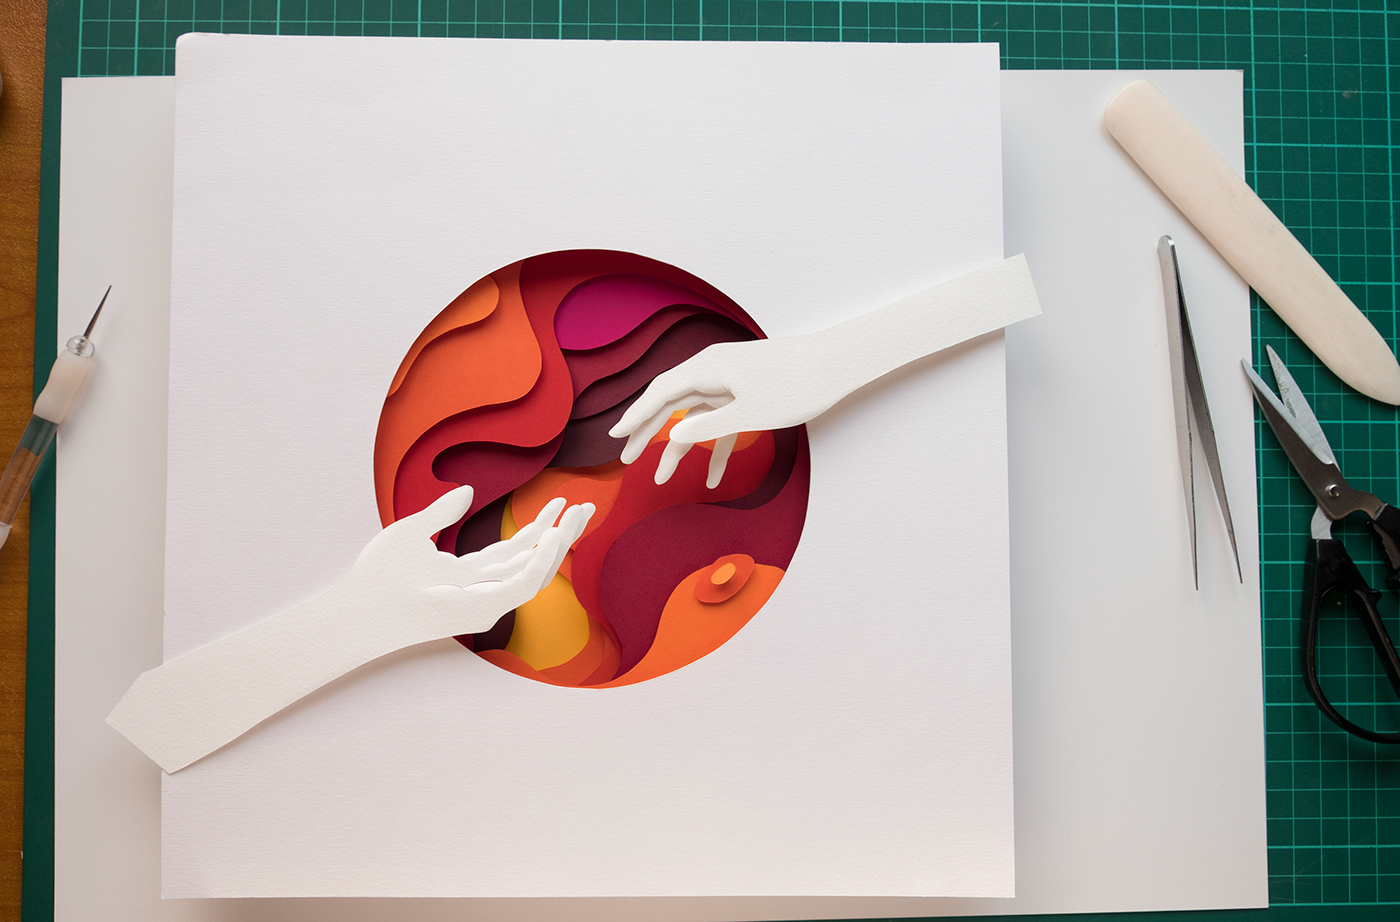 podcast cover design kind world hands 3D paper art paper cut paper dimensional paper sculpture